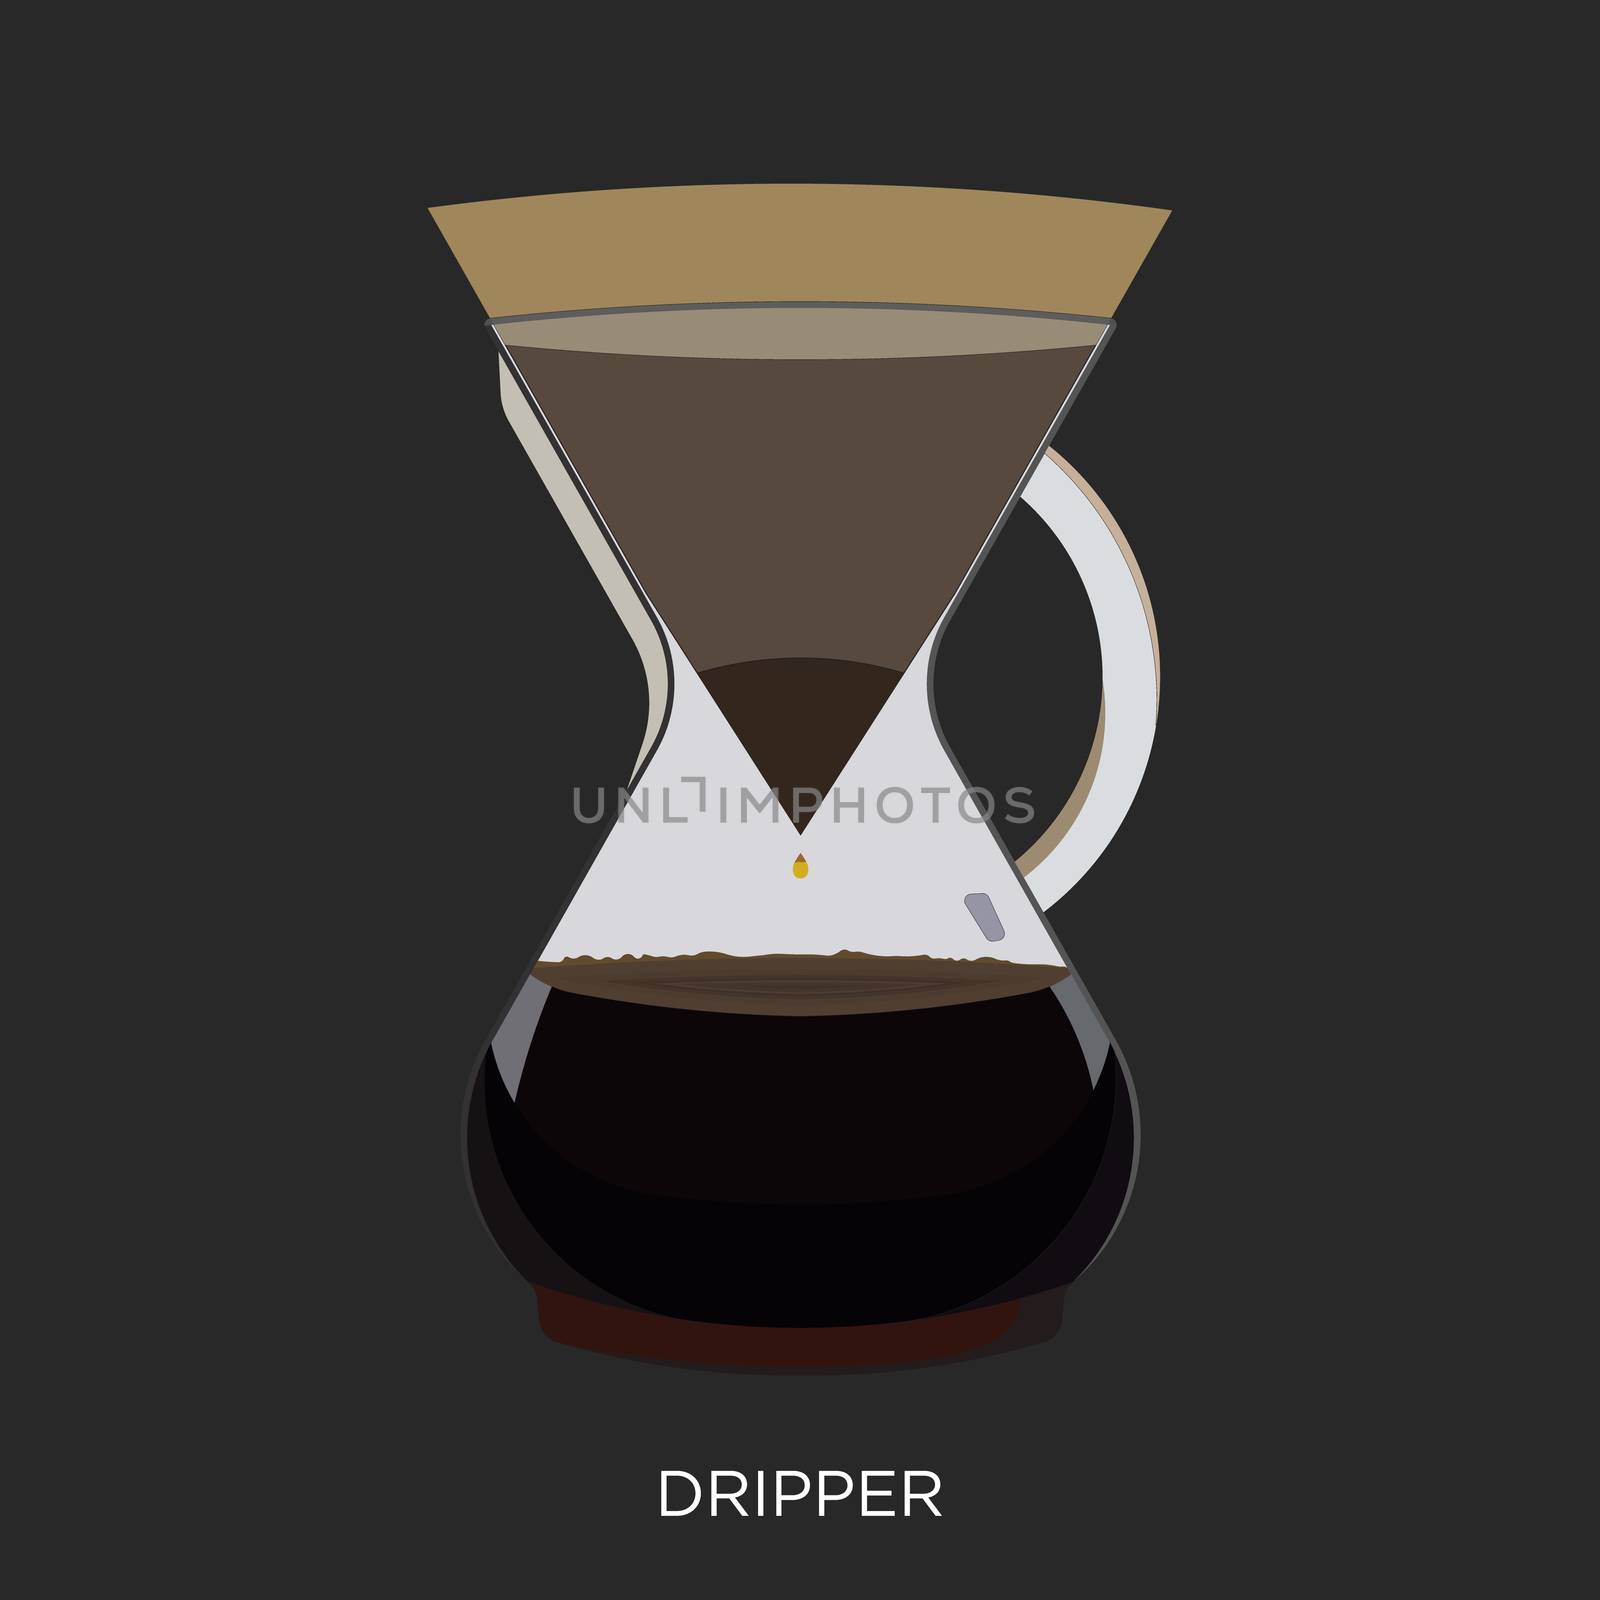 Handled Chemex, Drip Coffee Maker by landscafe